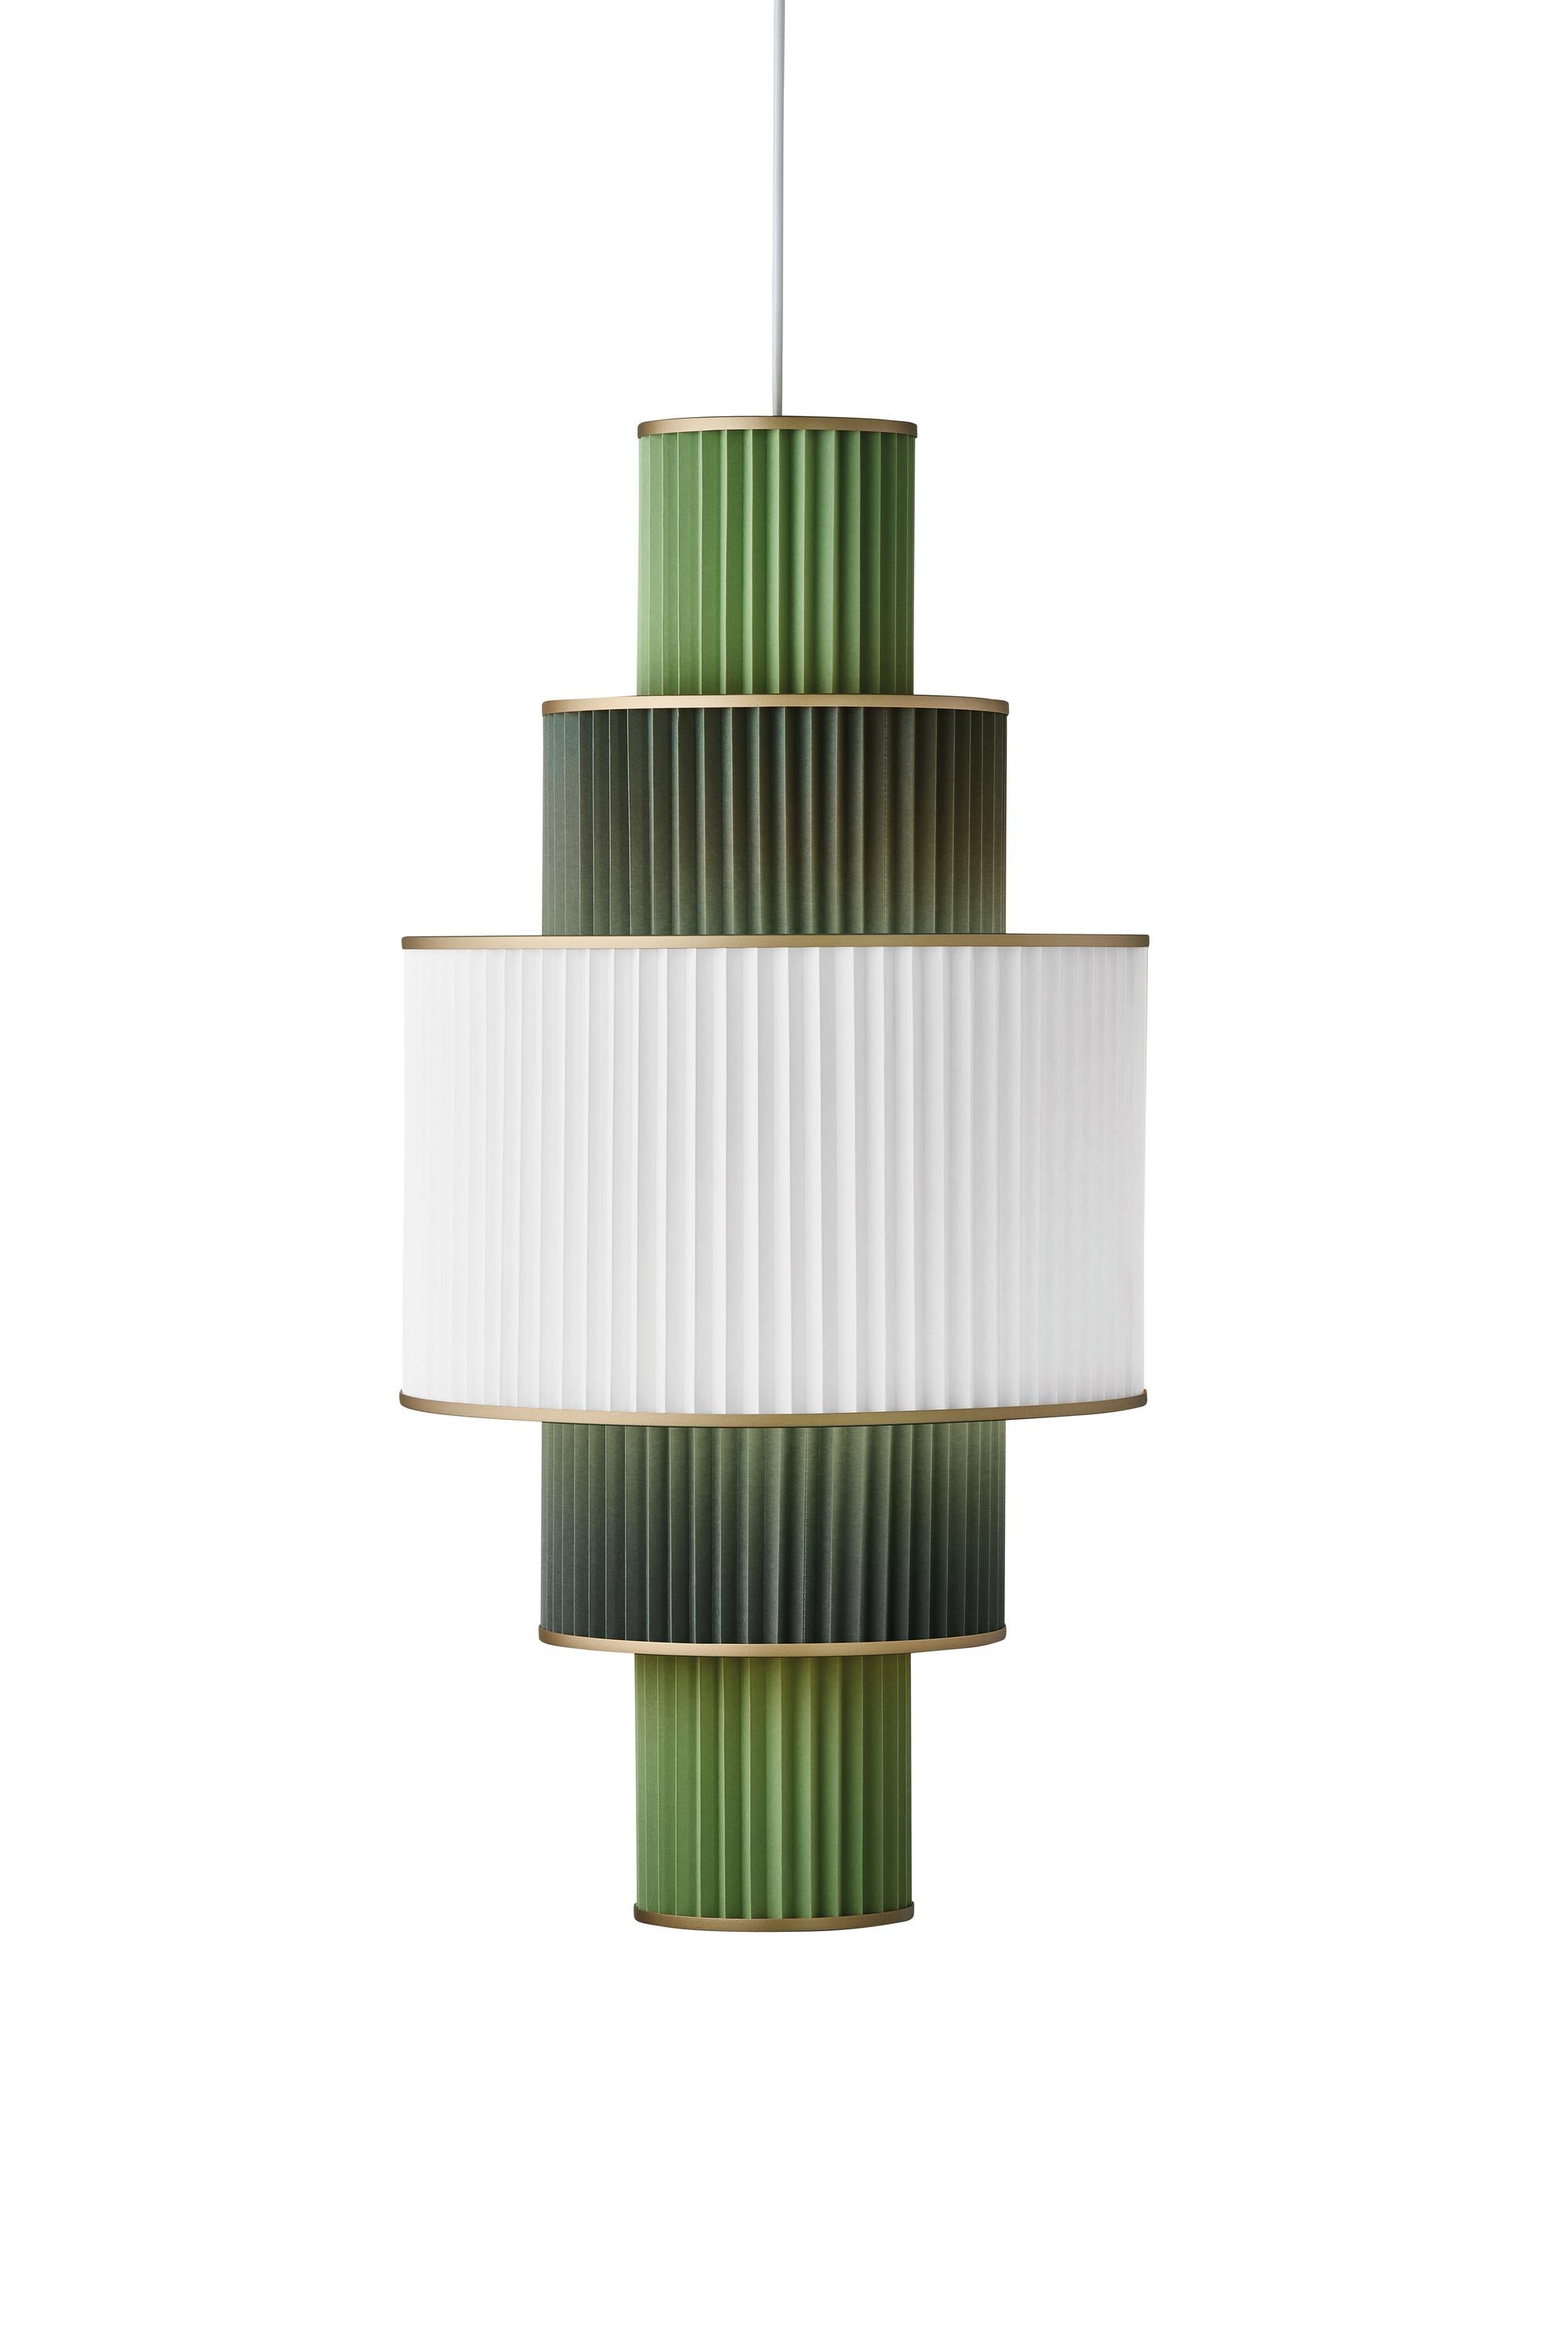 Le Klint Plivello Suspension Lamp Golden/White/Light Green With 5 Shades (S M L M S)